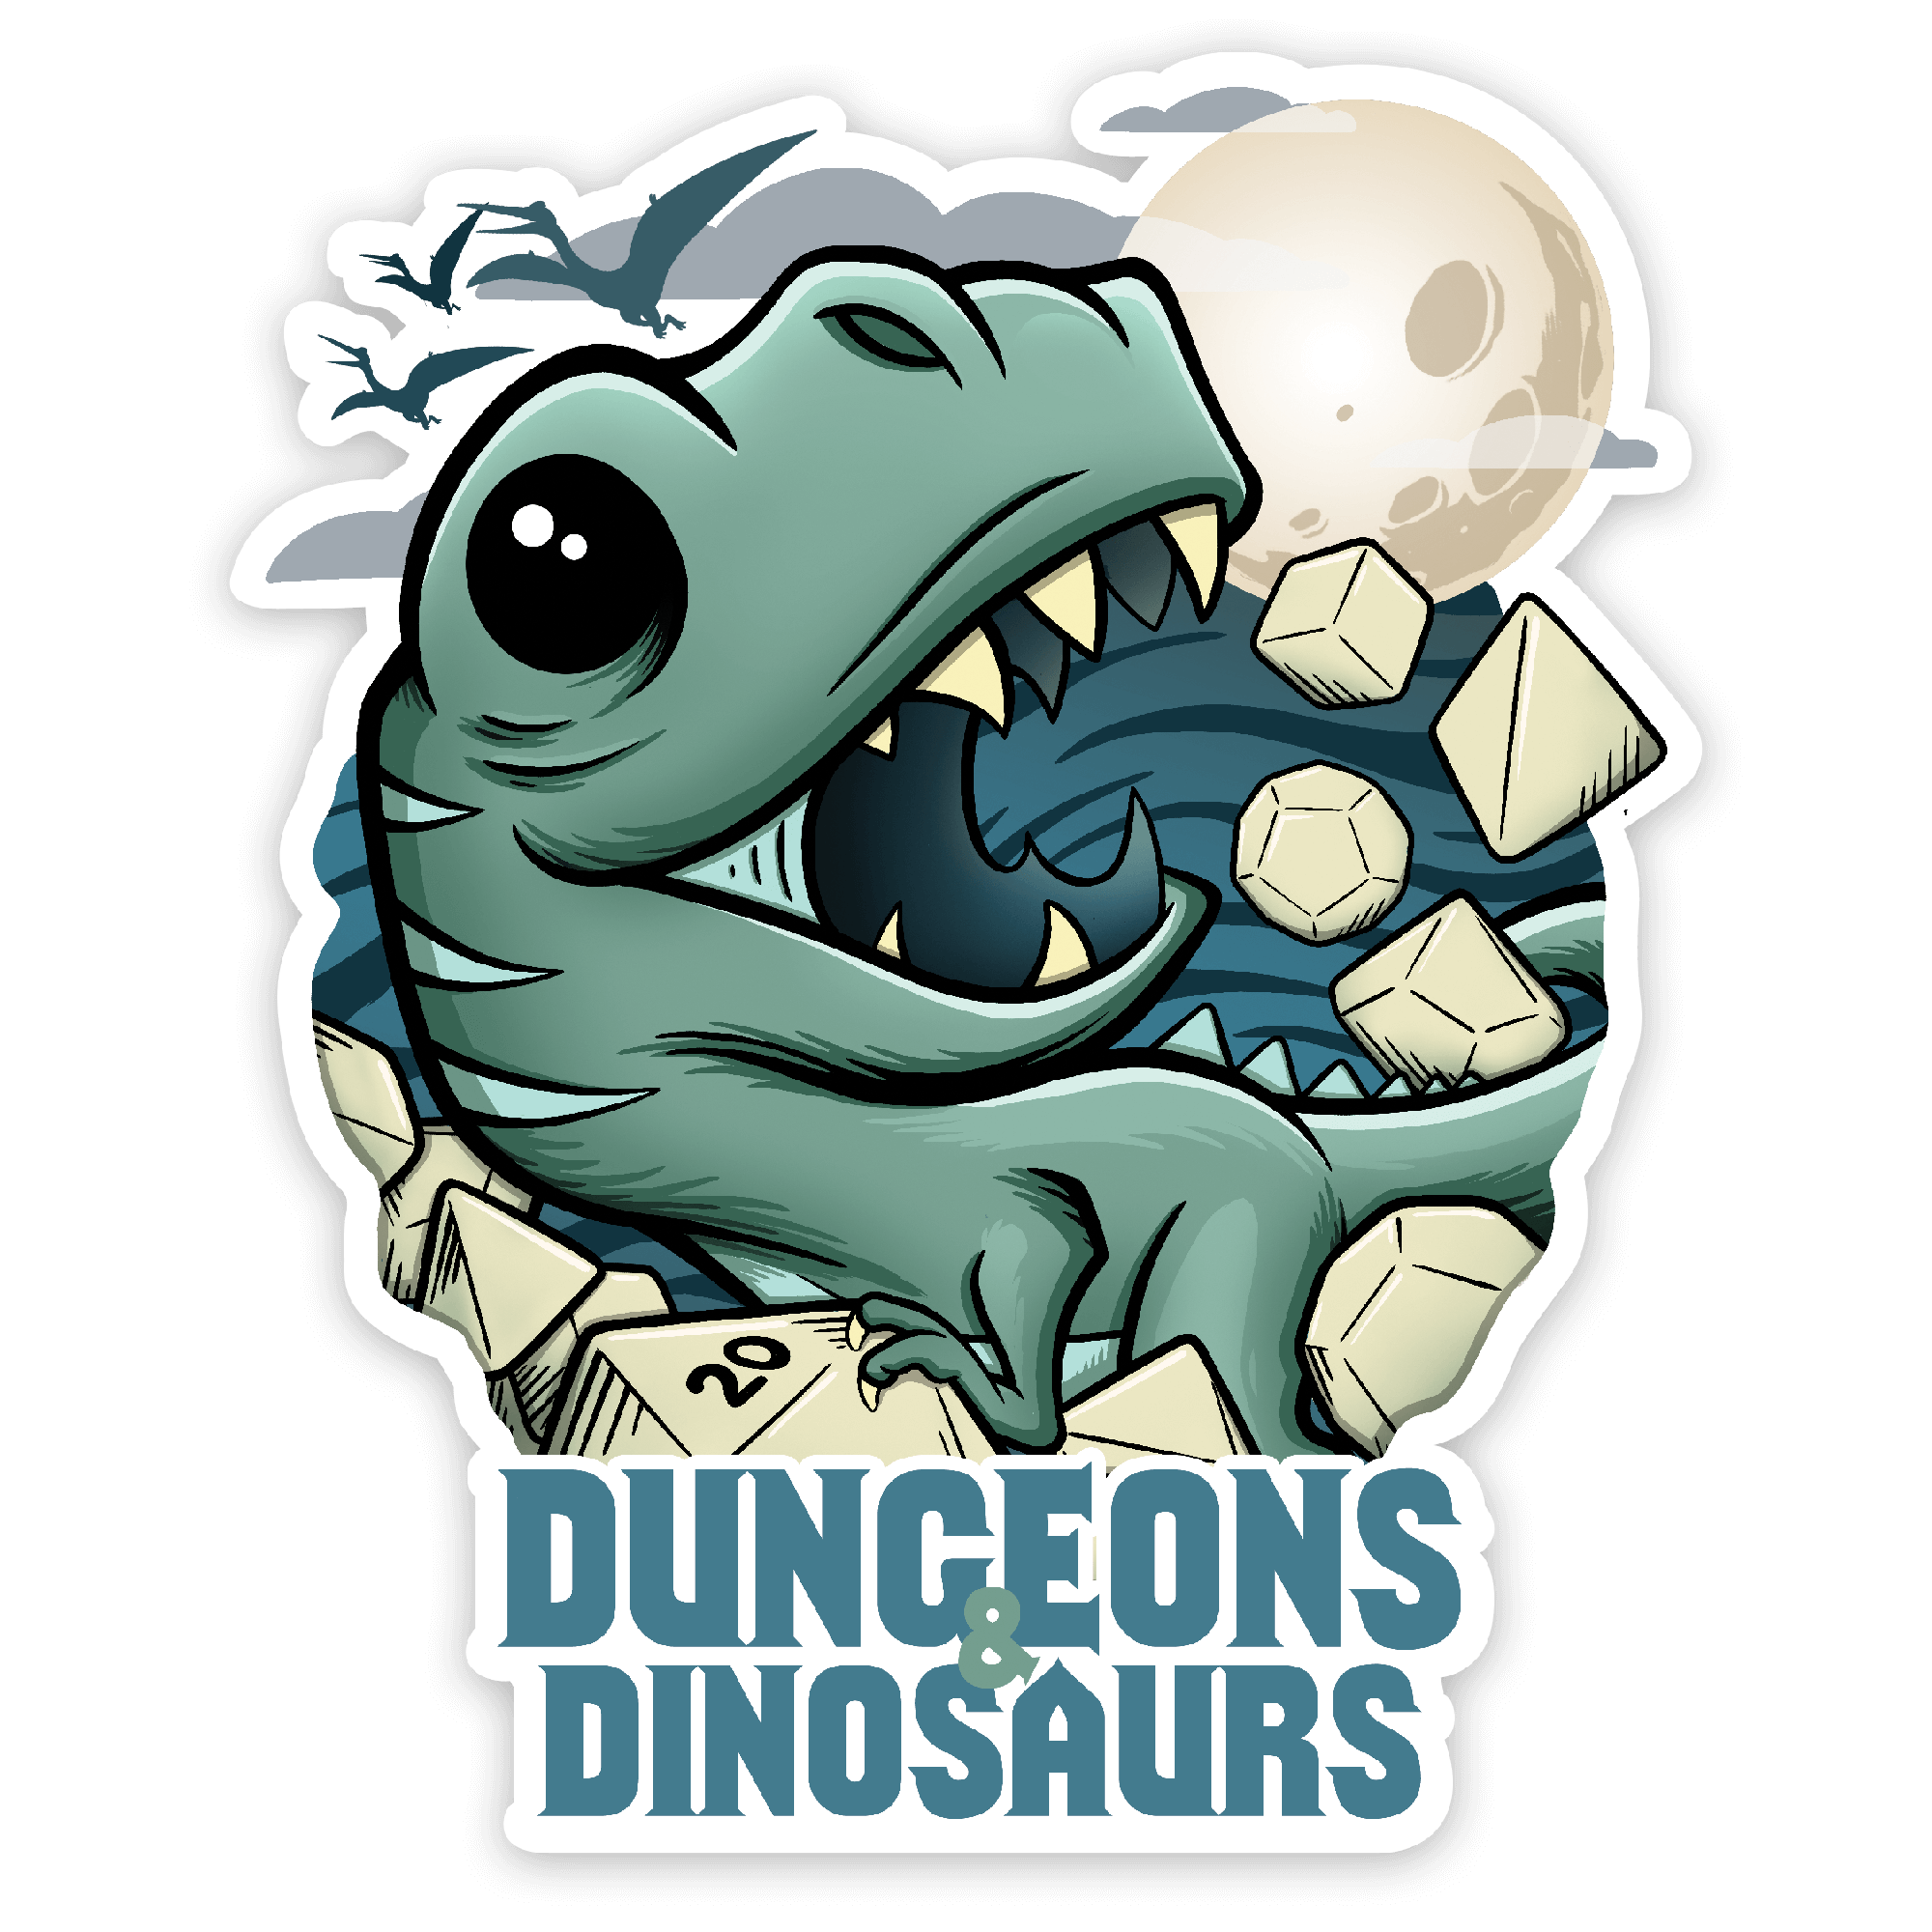 Dungeons and Dinosaurs Sticker - D&D / TTRPG Sticker - Glassstaff